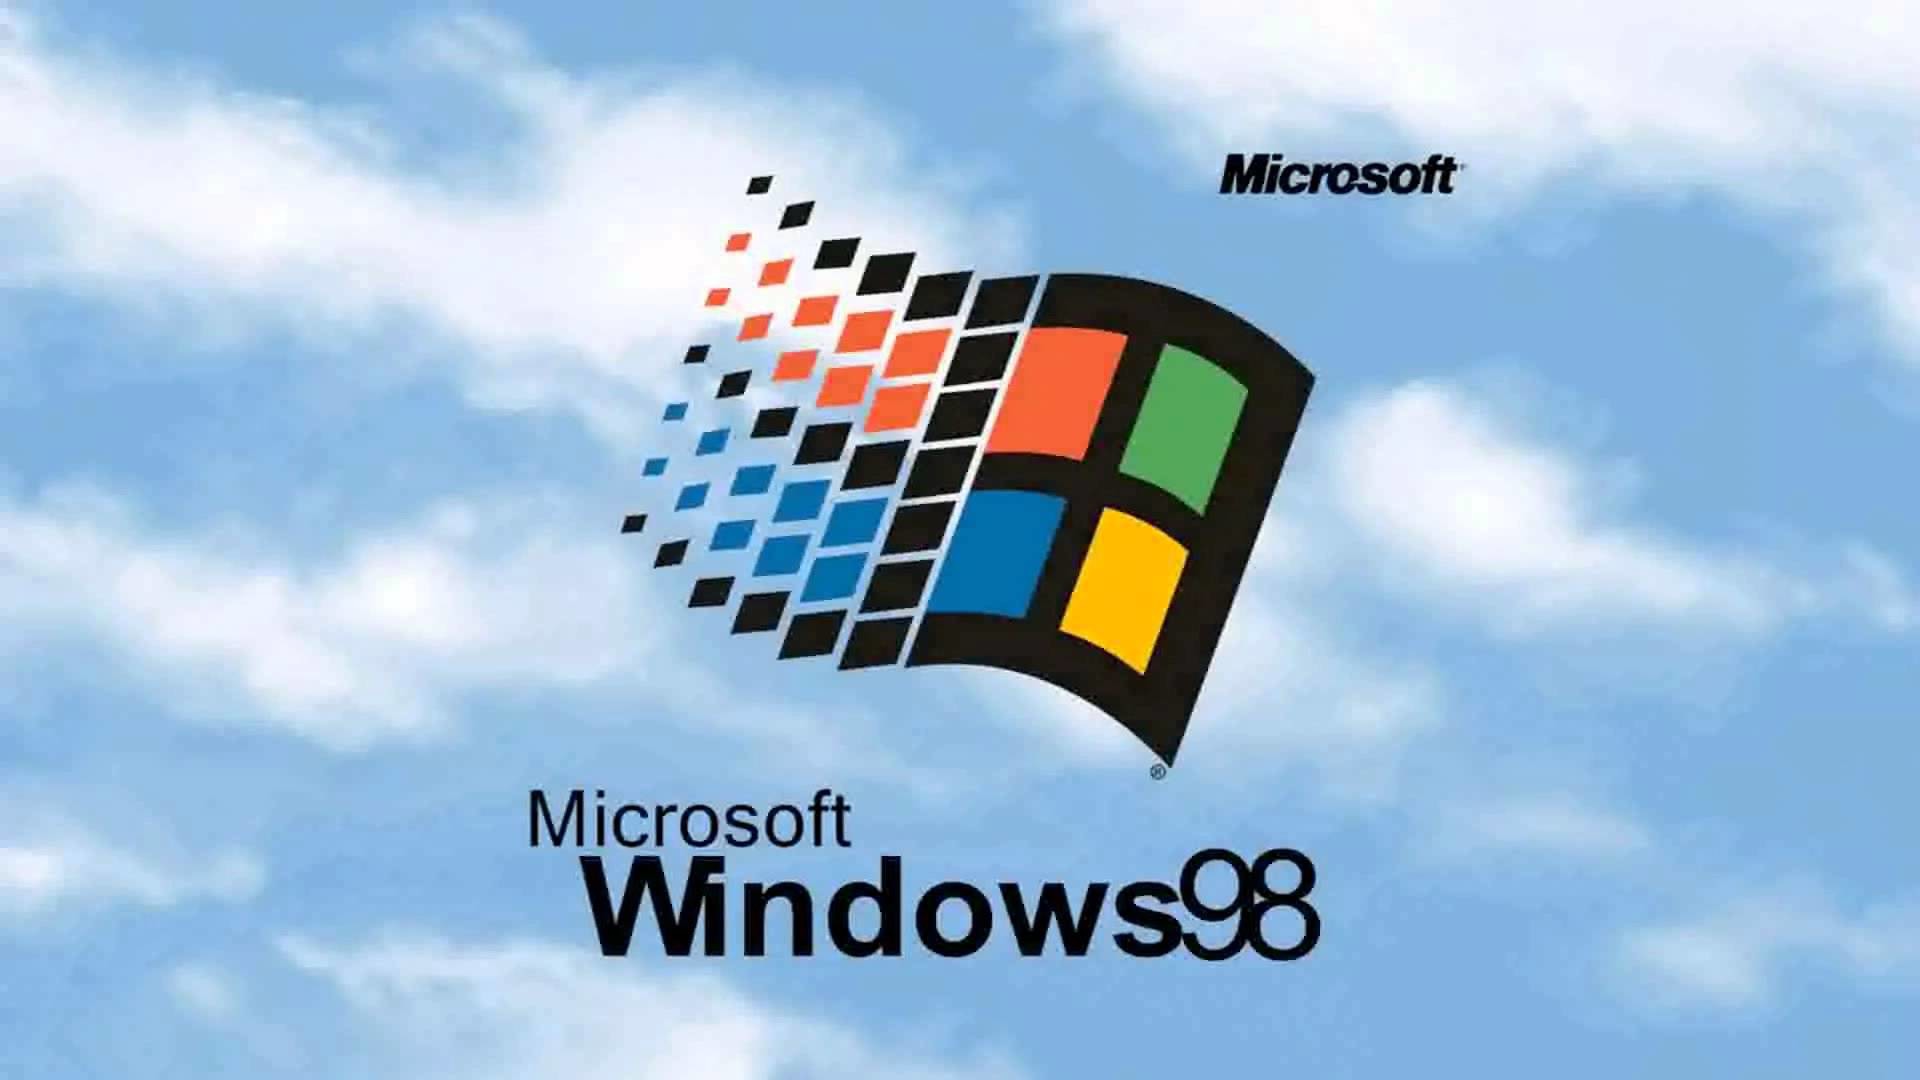 Сайты про windows. Windows 98 рабочий стол. Фон Windows 95. Заставка виндовс 95. Windows 95 рабочий стол.